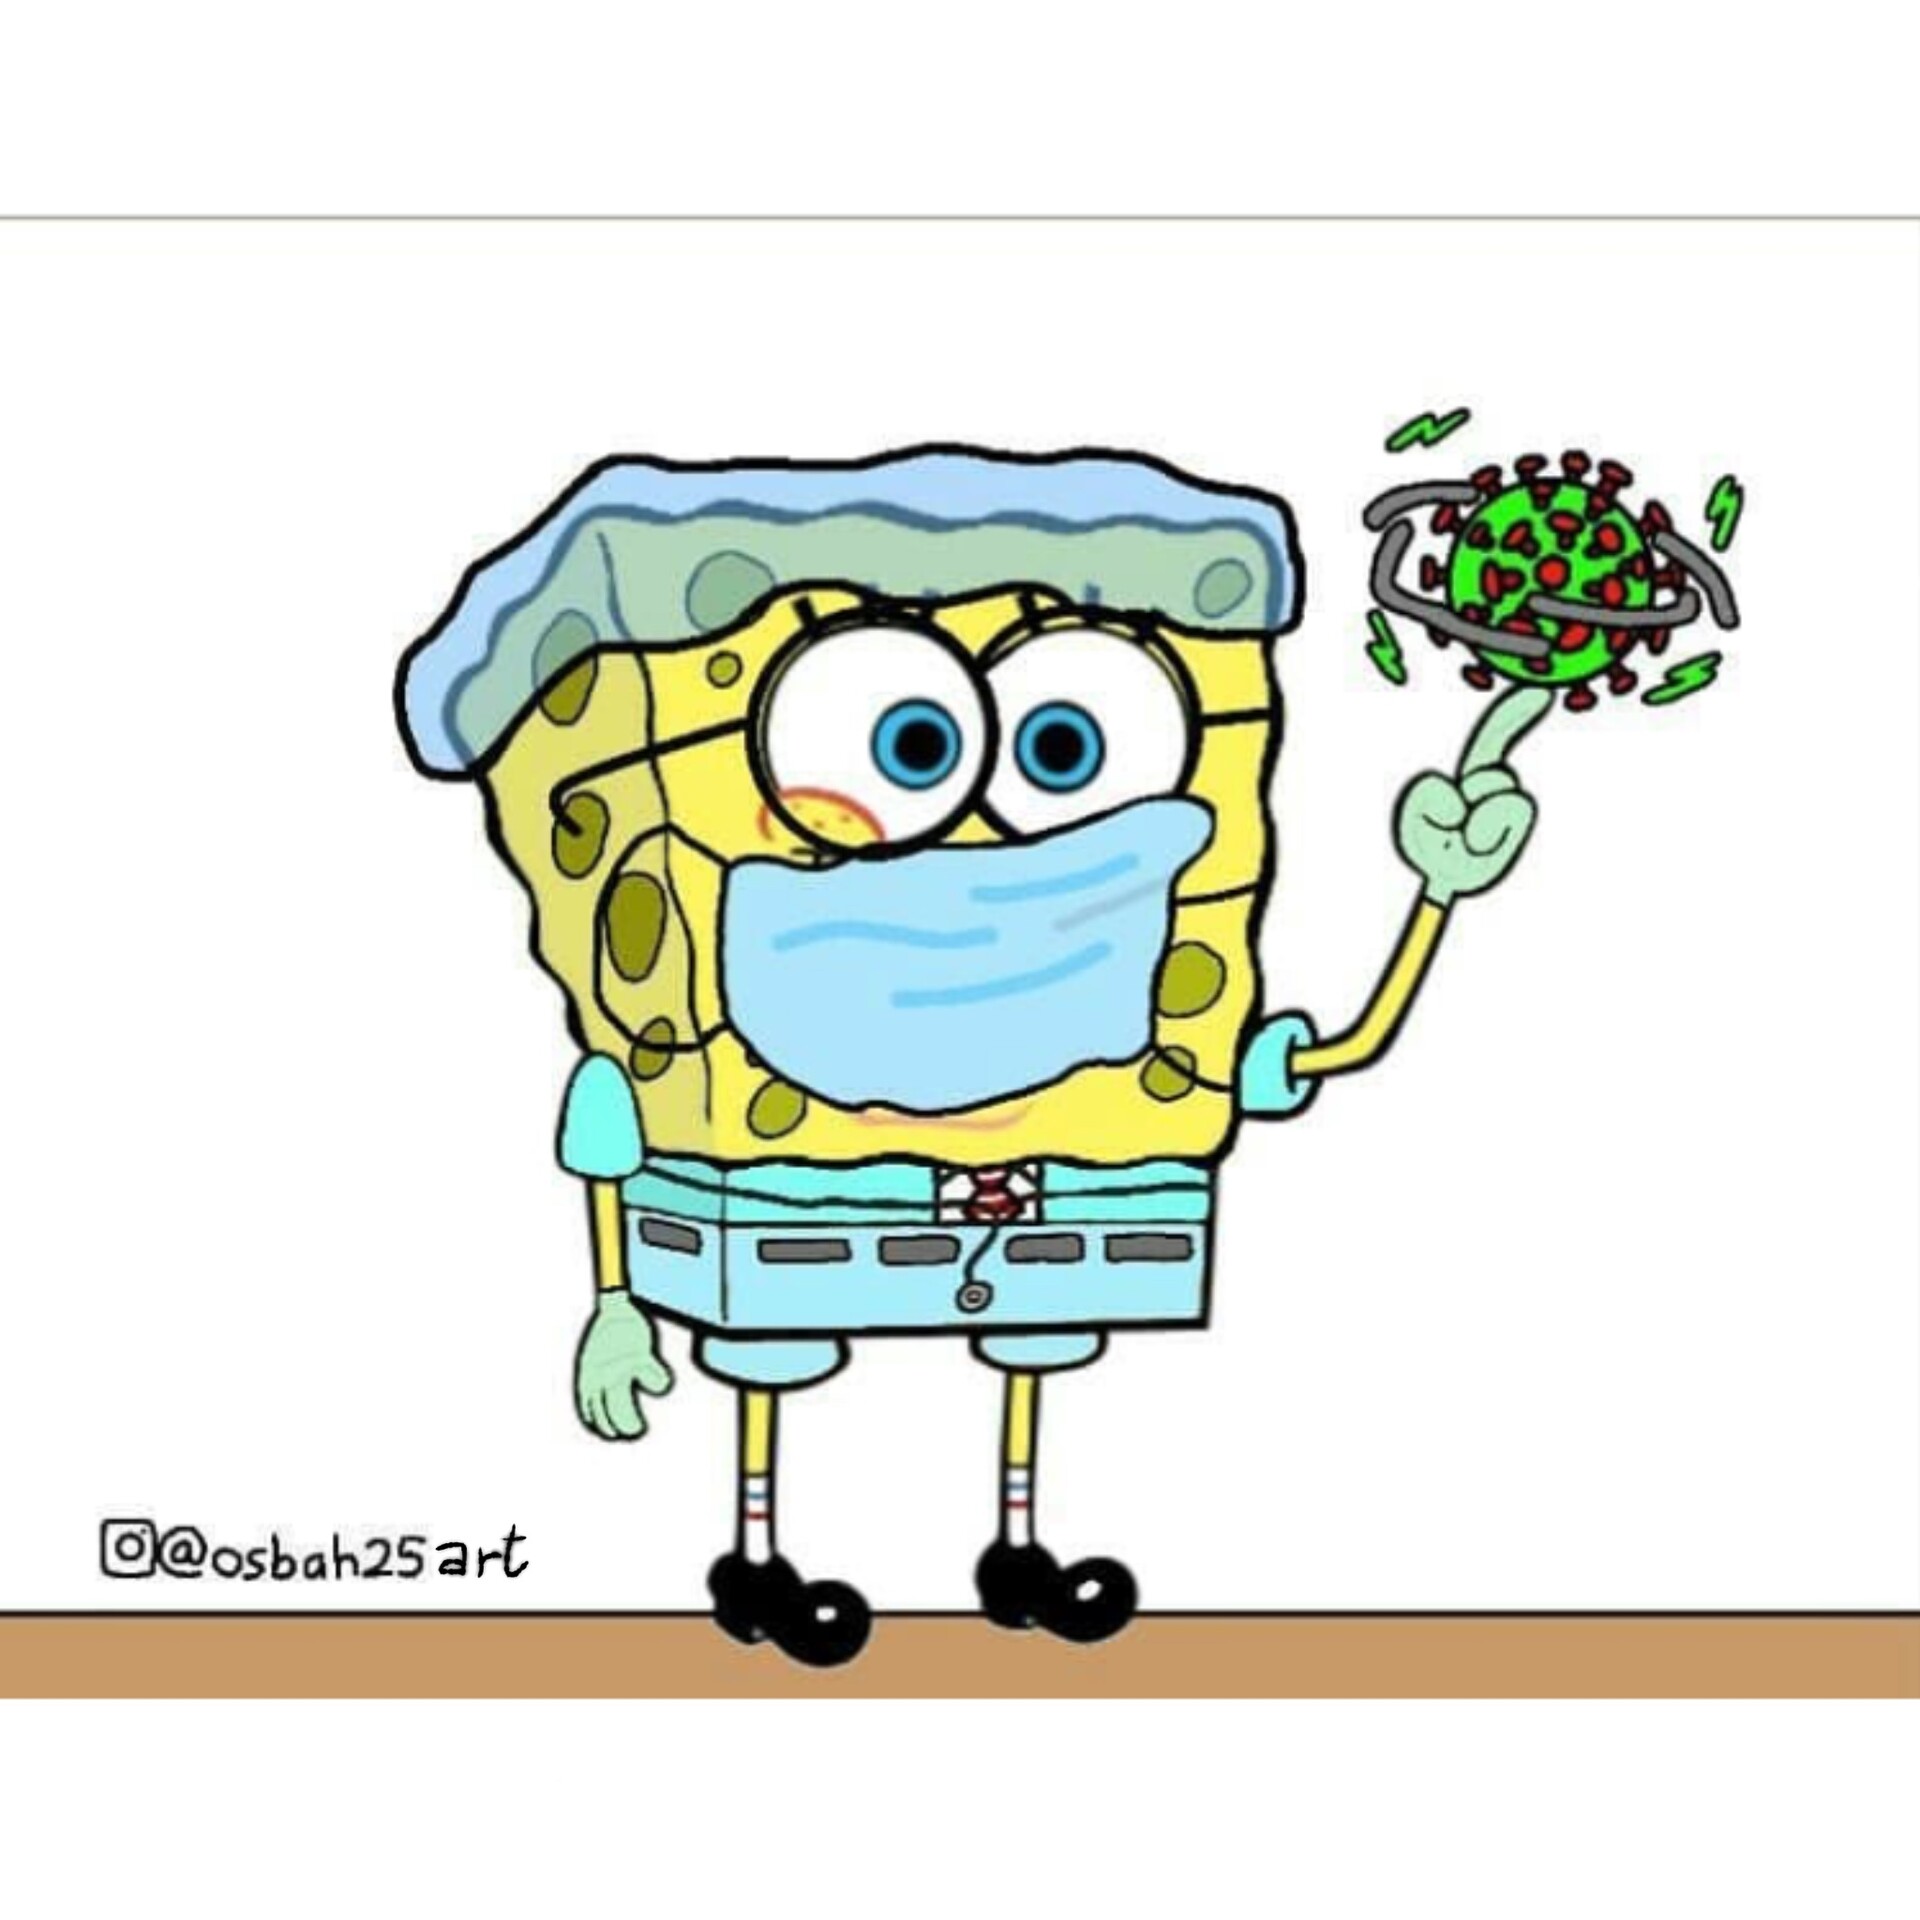 inevercare portrayed by Spongebob by Thenewmikefan21 on DeviantArt